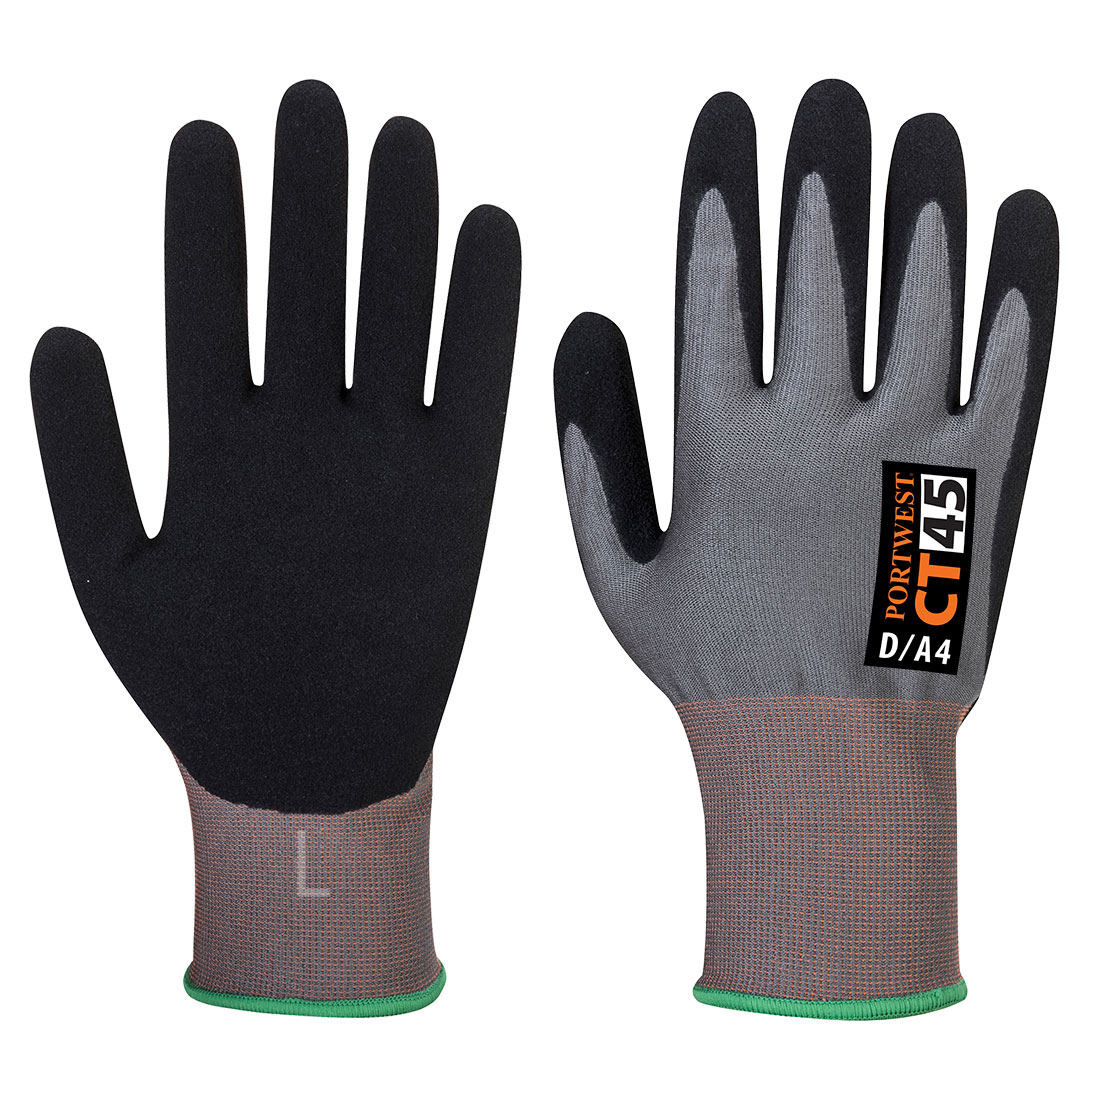 Cut Resistant Glove Levels 